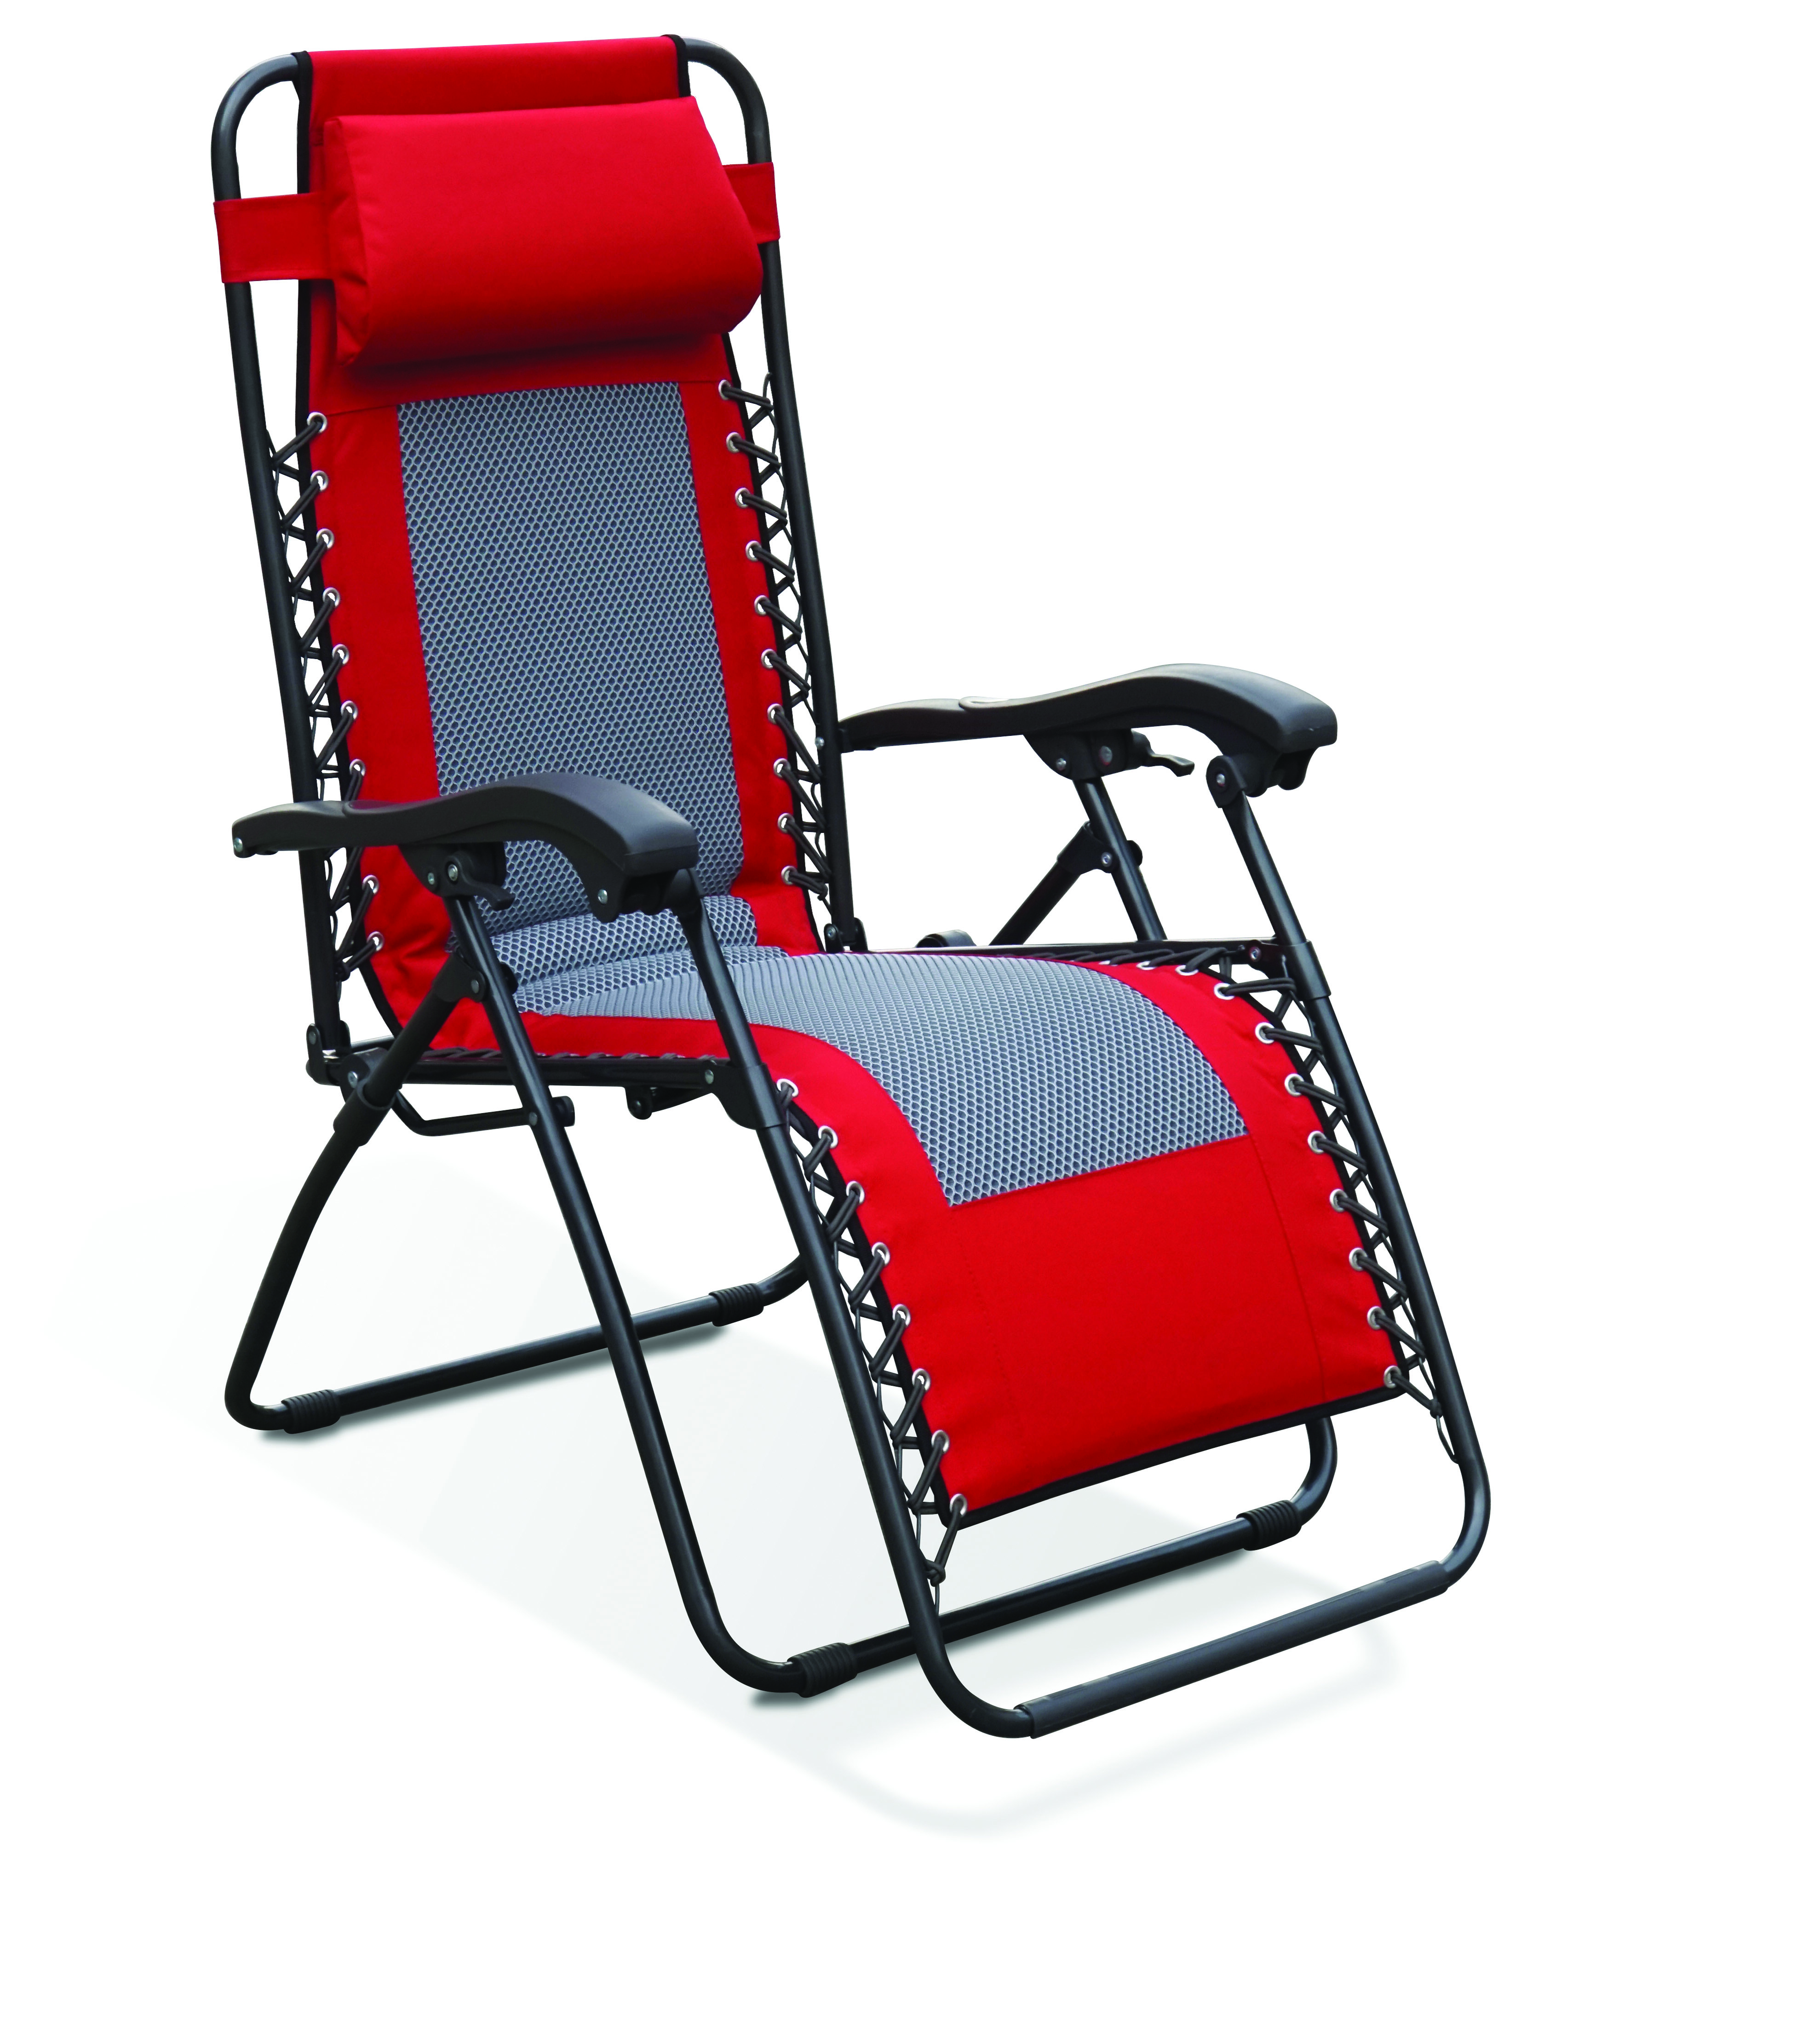 Outdoor Relaxer Chair Chair Ideas